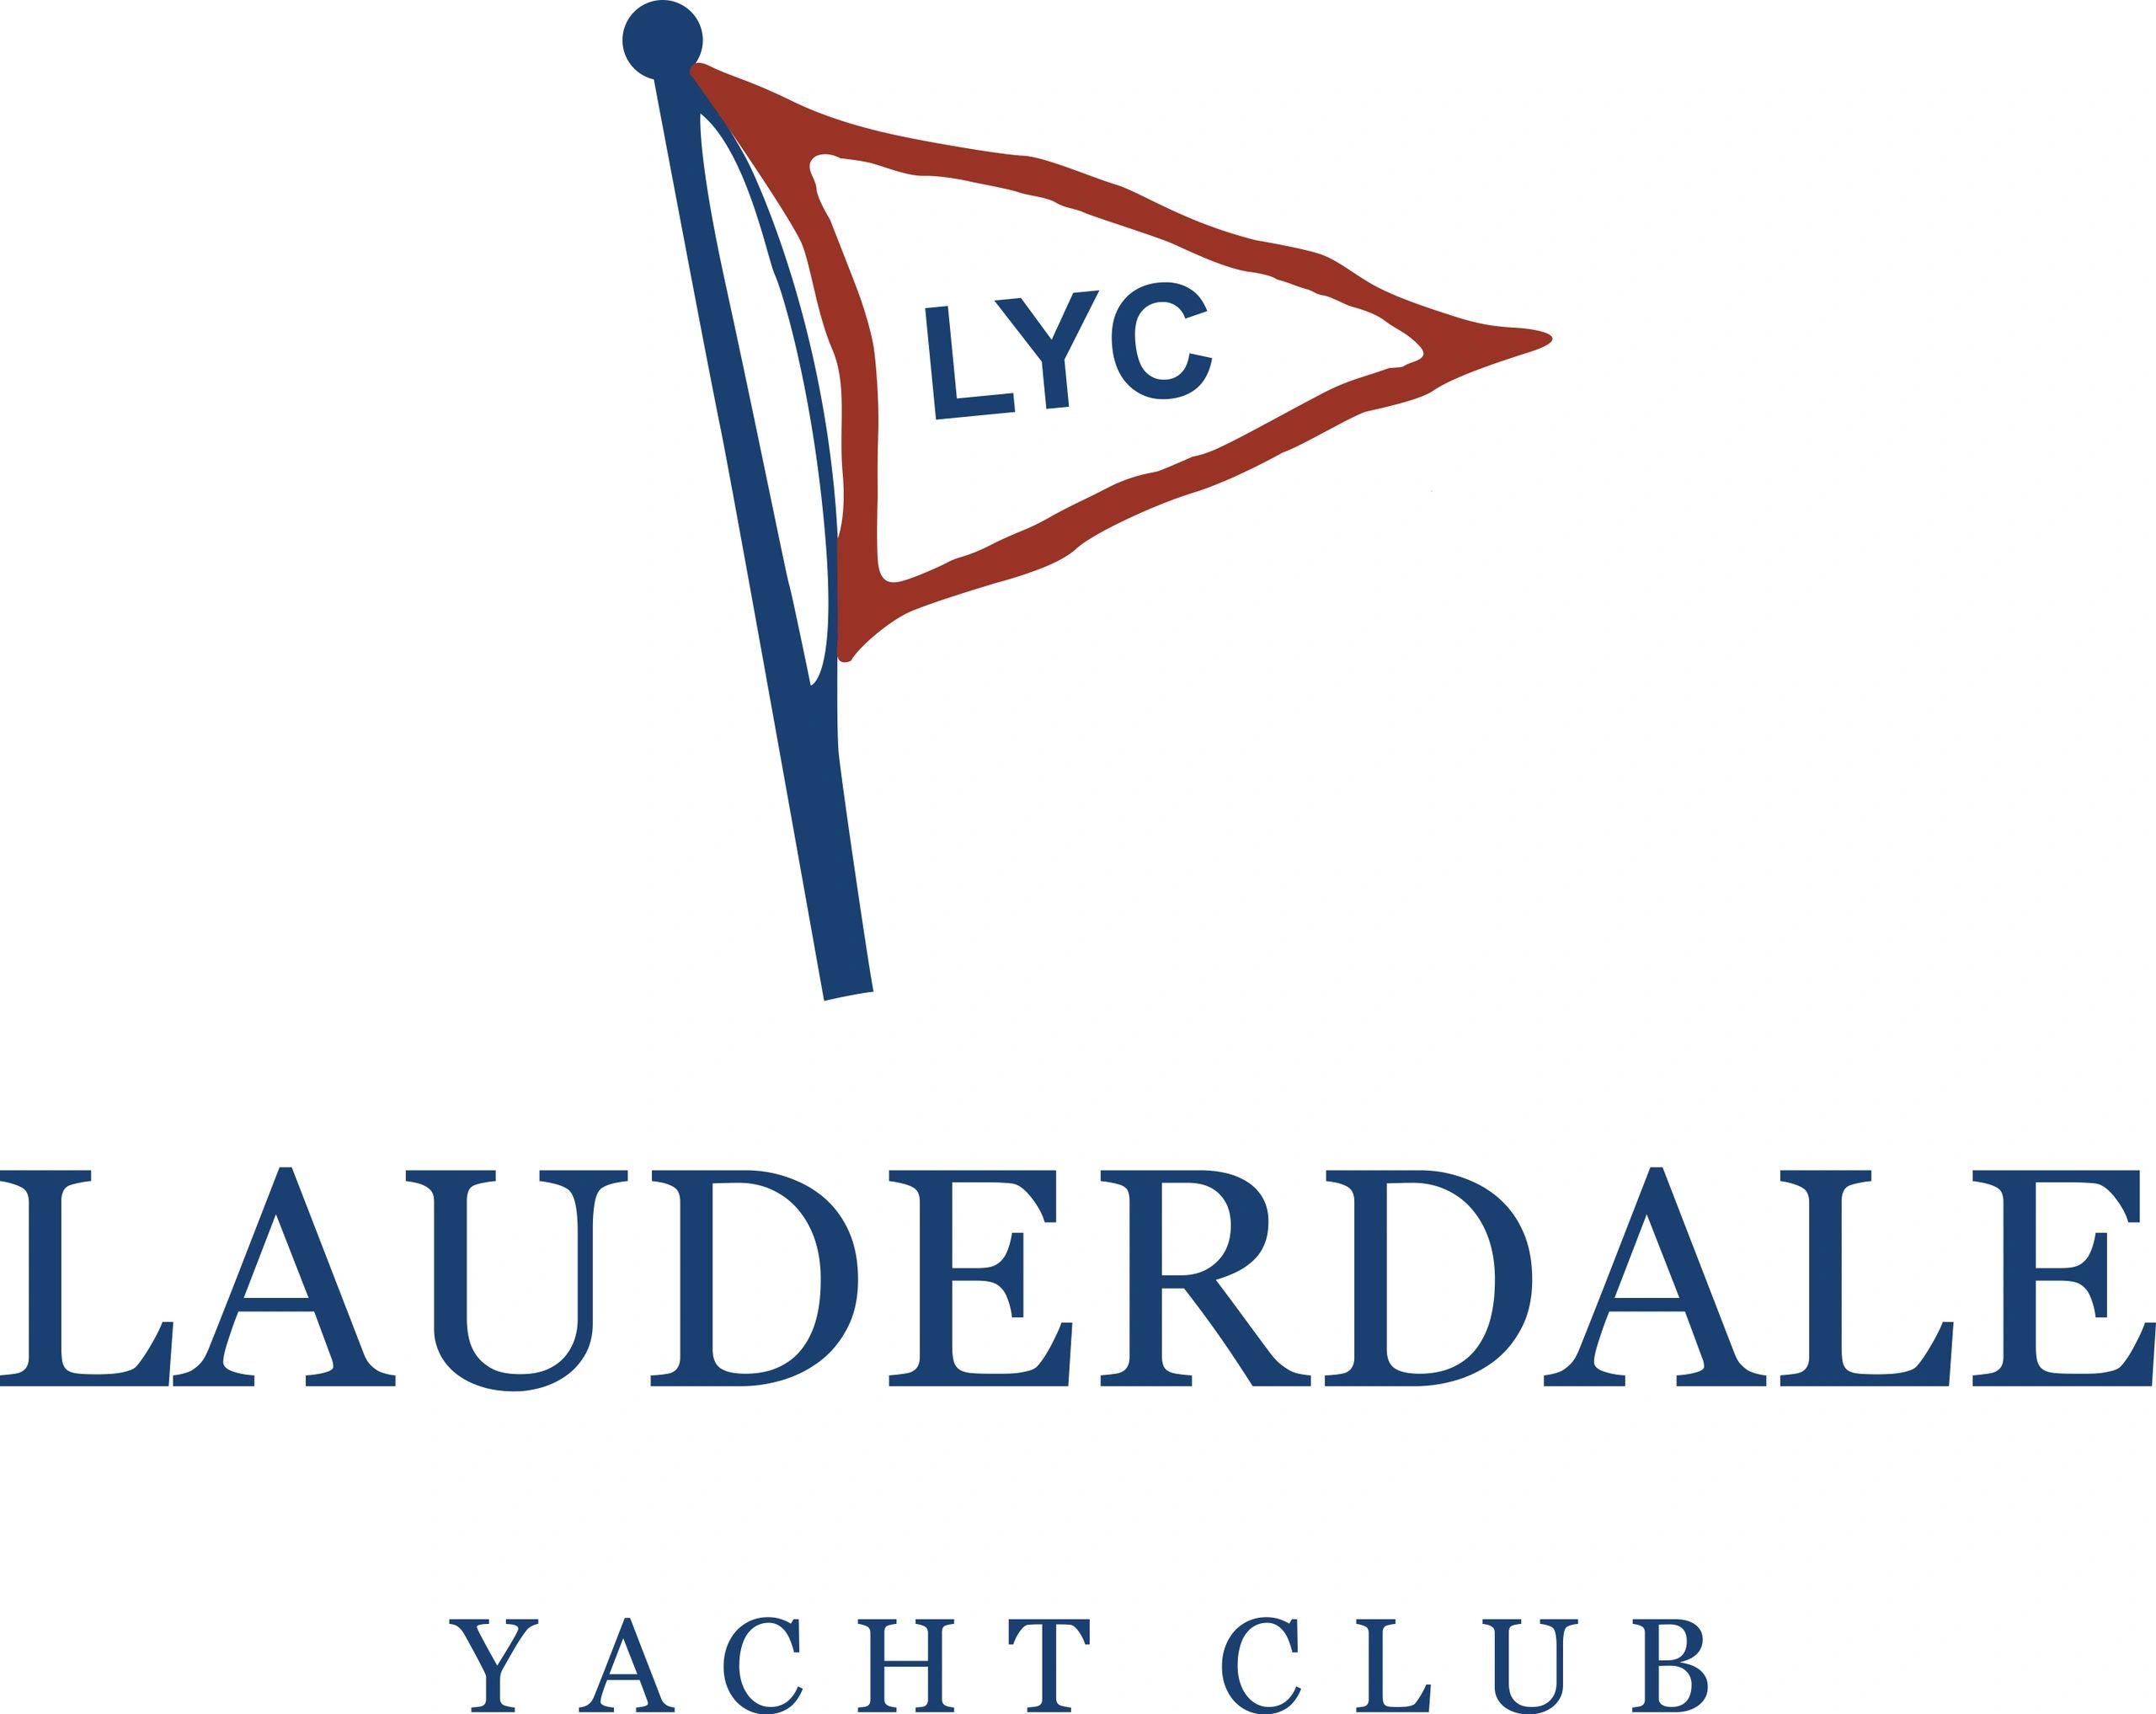 lauderdale yacht club membership fee